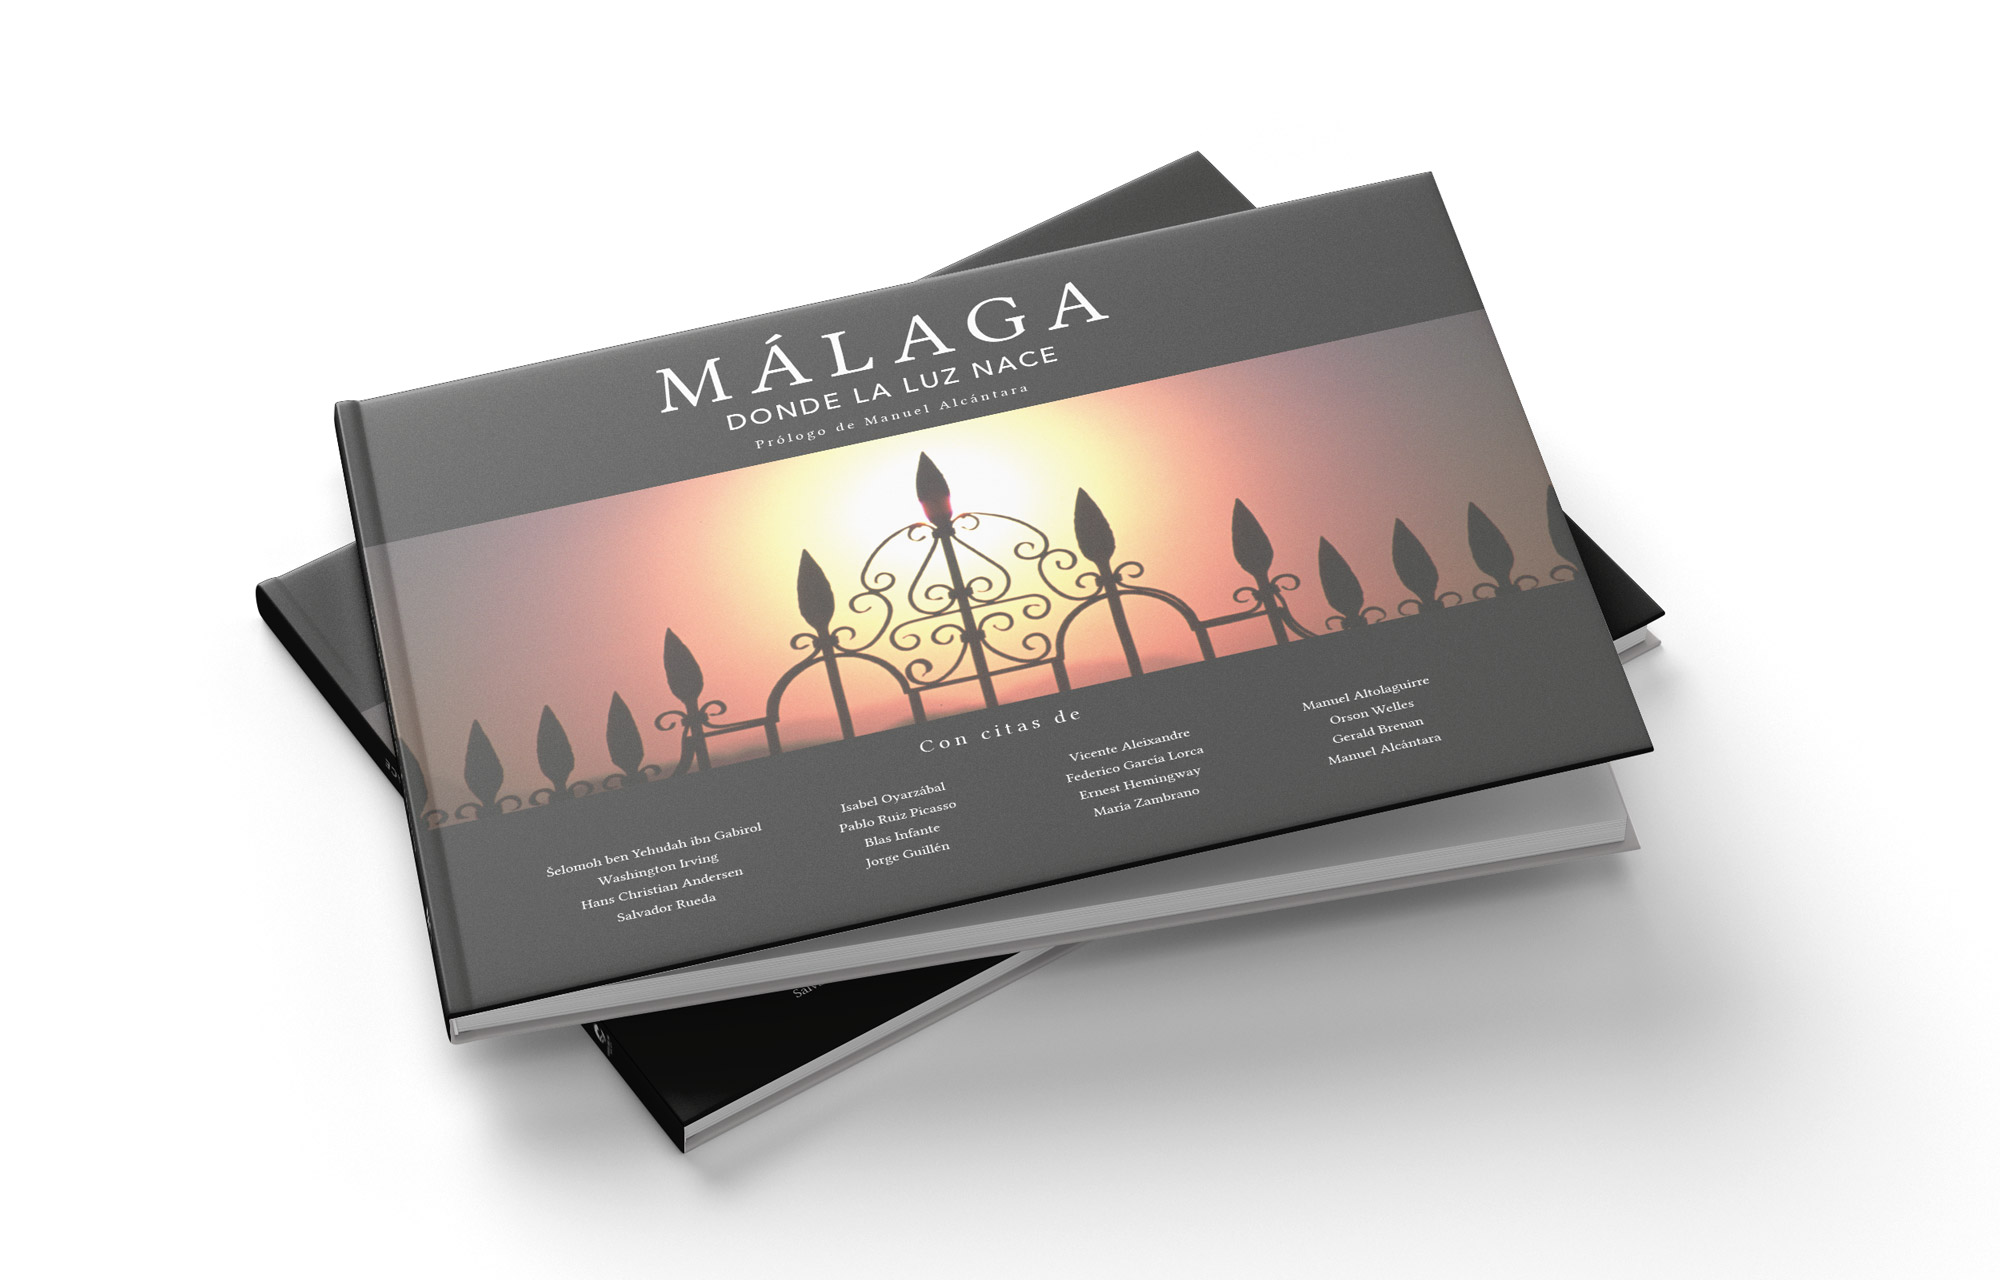 Málaga, donde la luz nace - Diseño Editorial - FANS MARKETING MÁLAGA